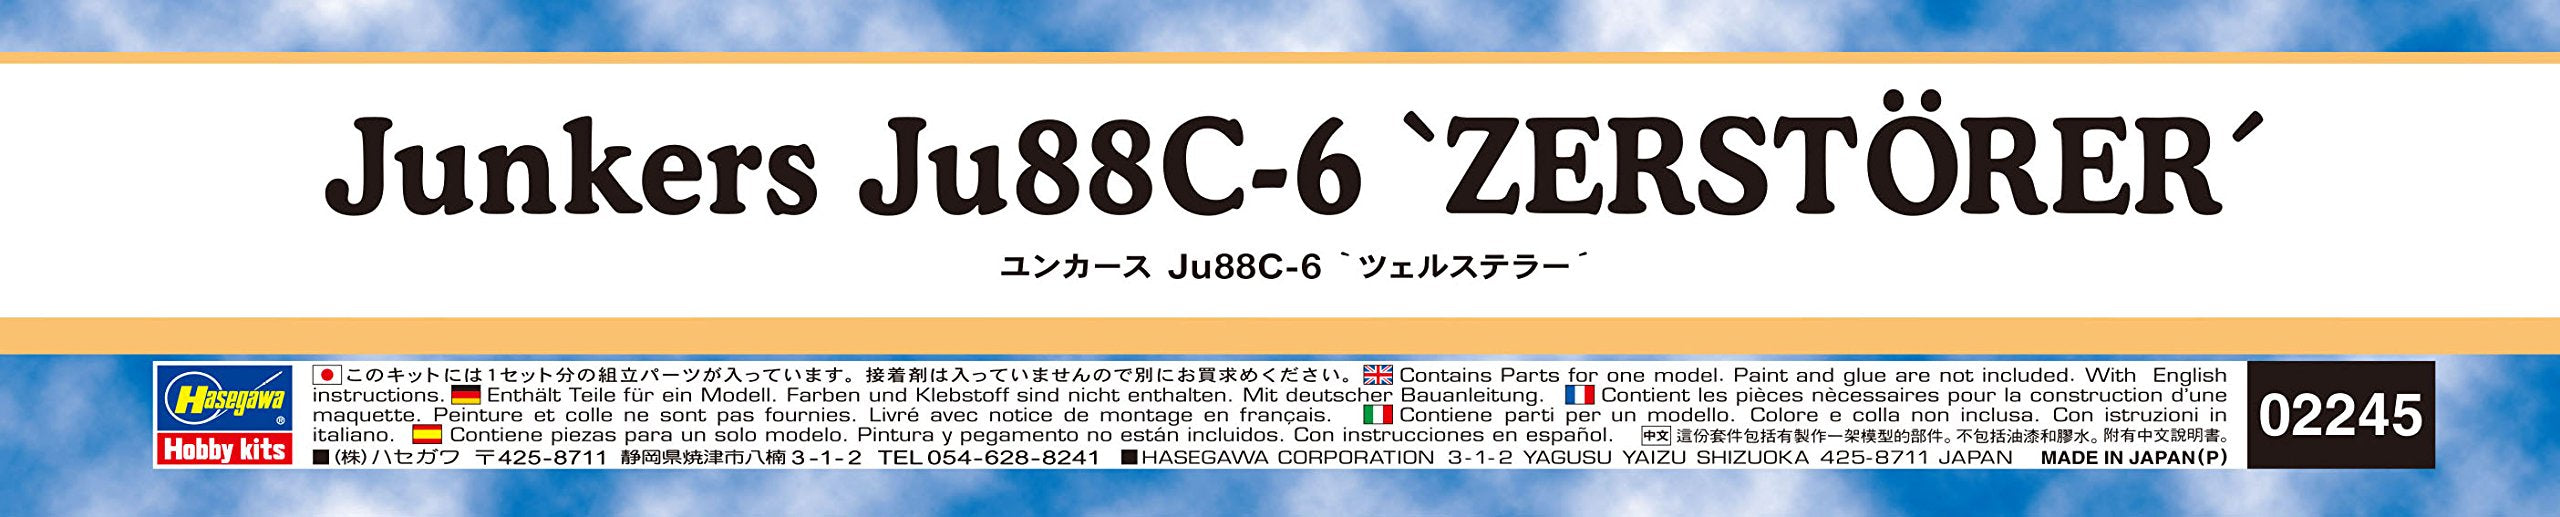 HASEGAWA 02245 Junkers Ju88C-6 Zerstorer Bausatz im Maßstab 1:72